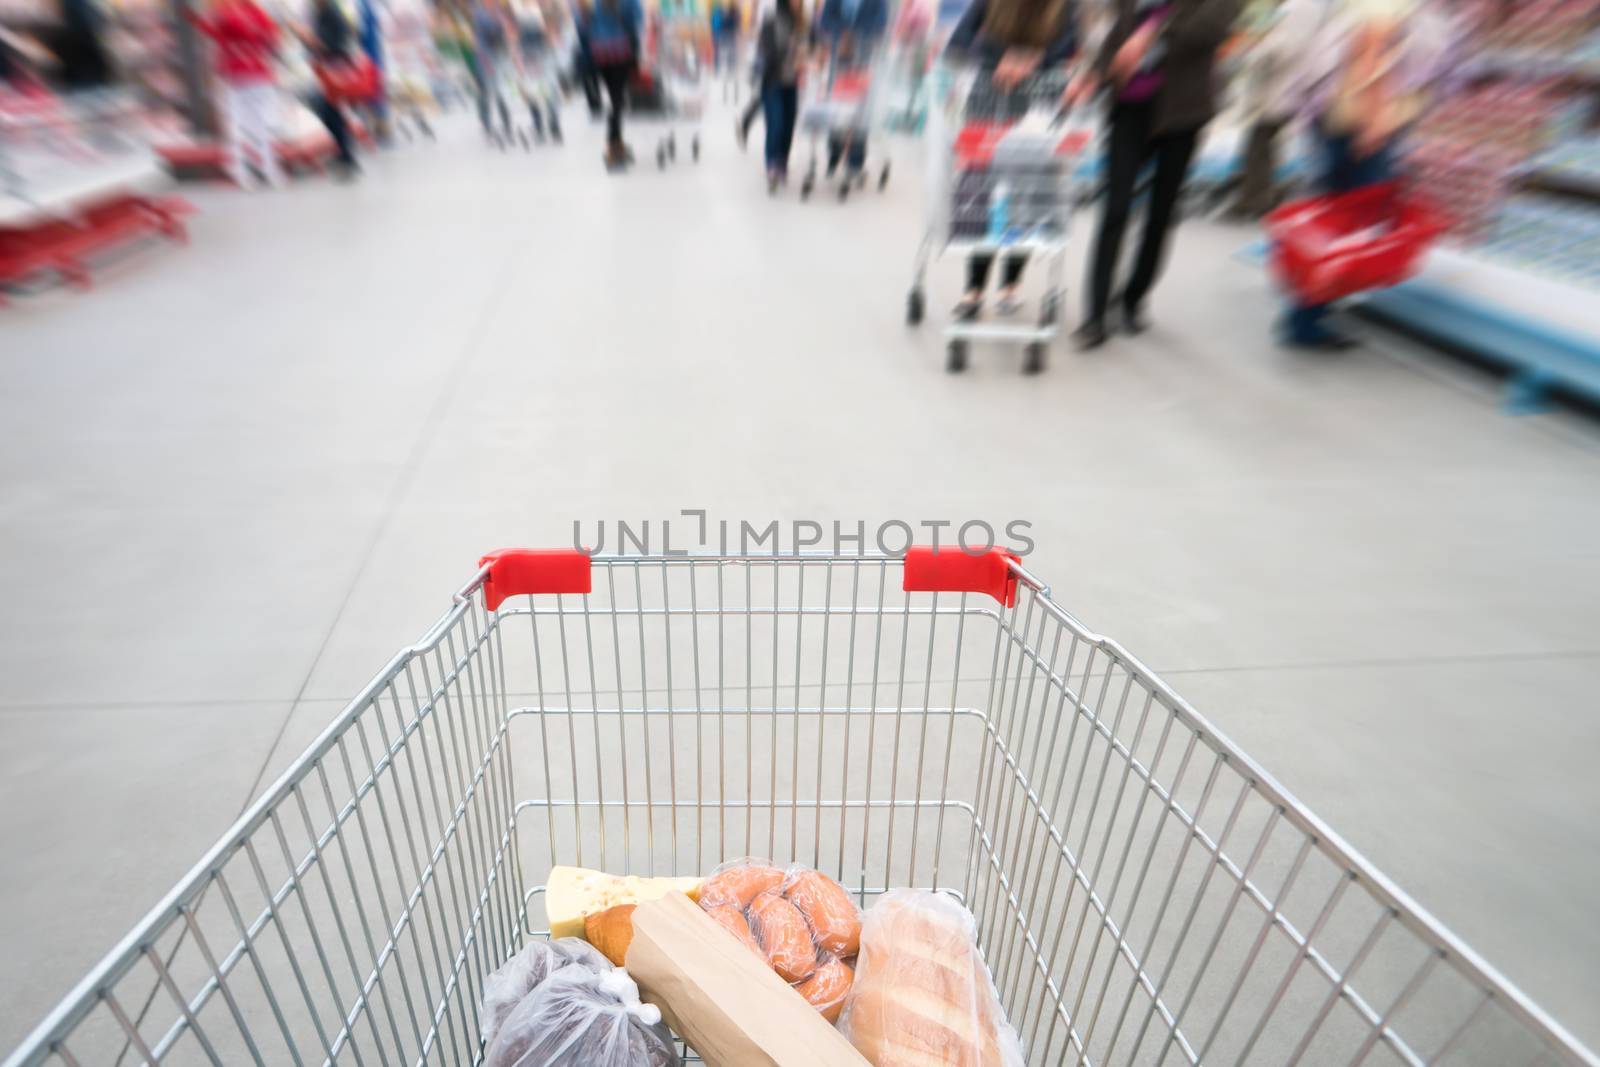 Shopping cart in supermarket by vapi